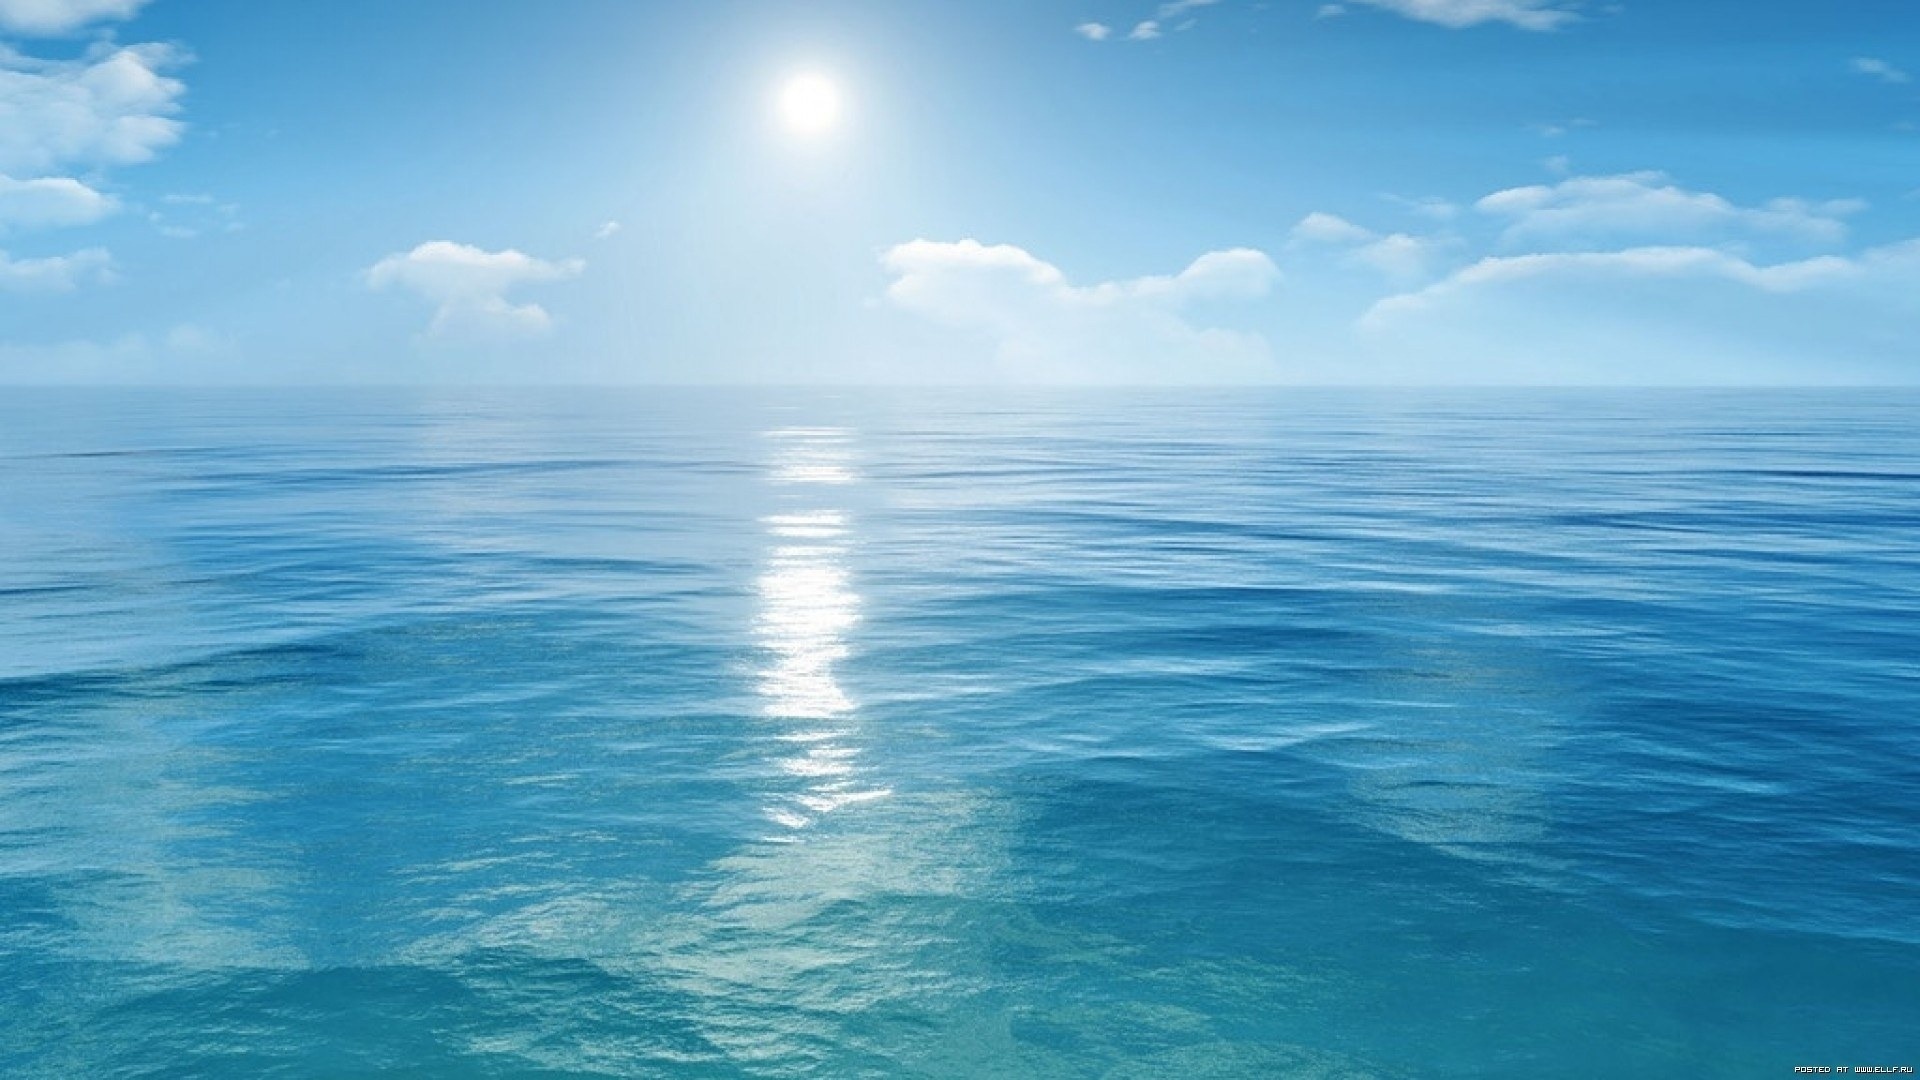 ocean scene wallpaper,sky,blue,body of water,sea,ocean